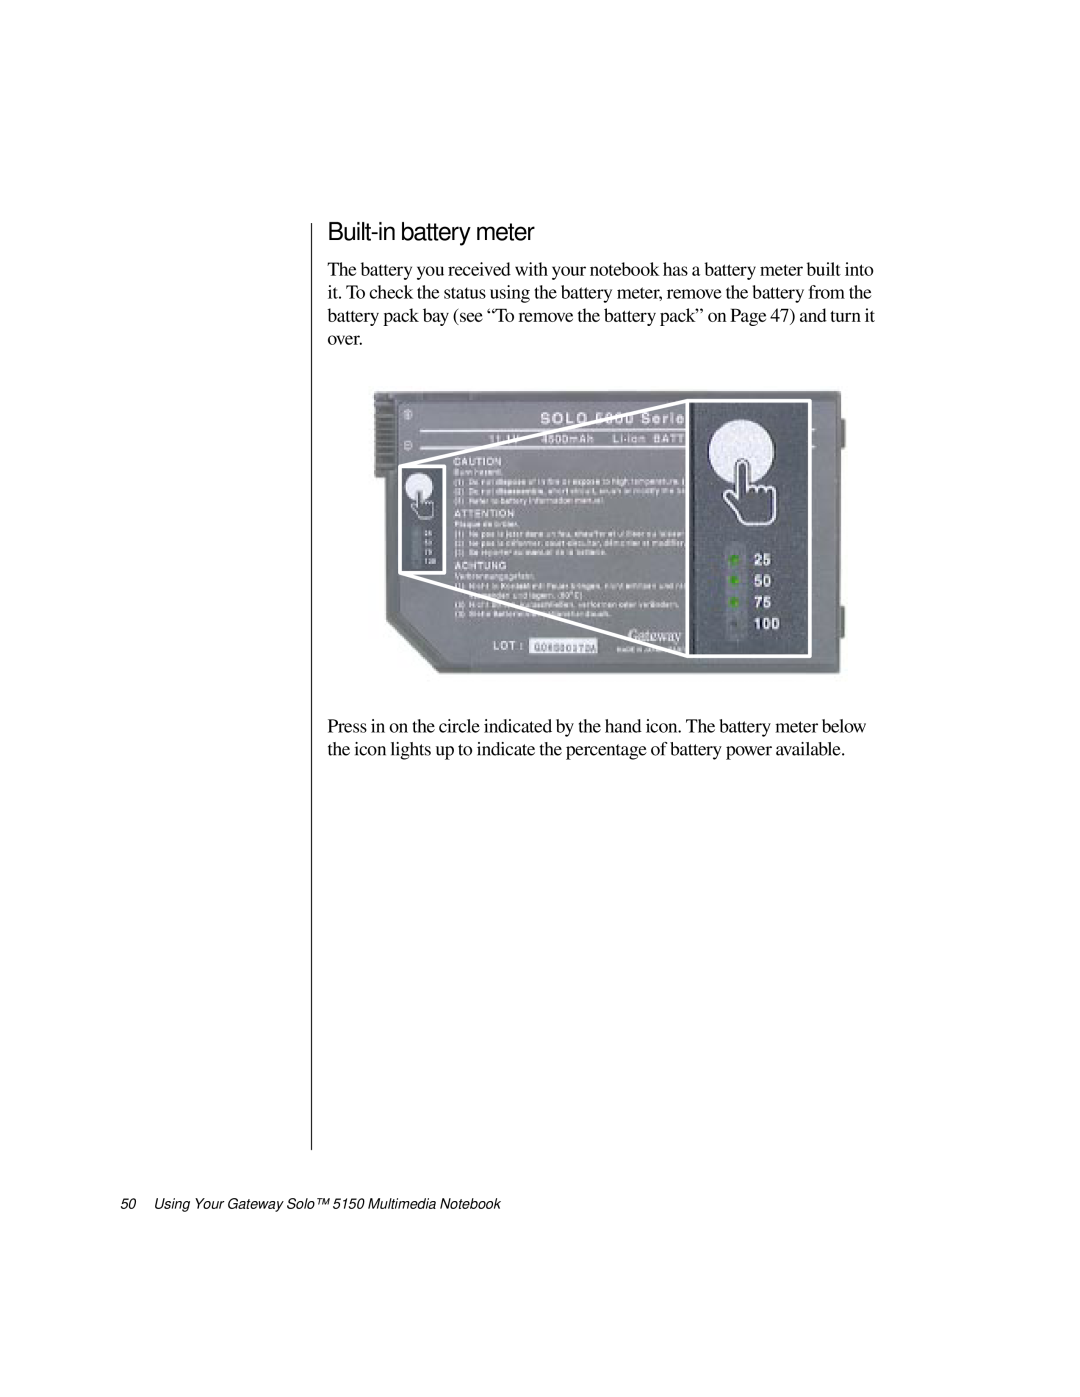 Gateway TM 5150 manual Built-in battery meter, Using Your Gateway Solo 5150 Multimedia Notebook 